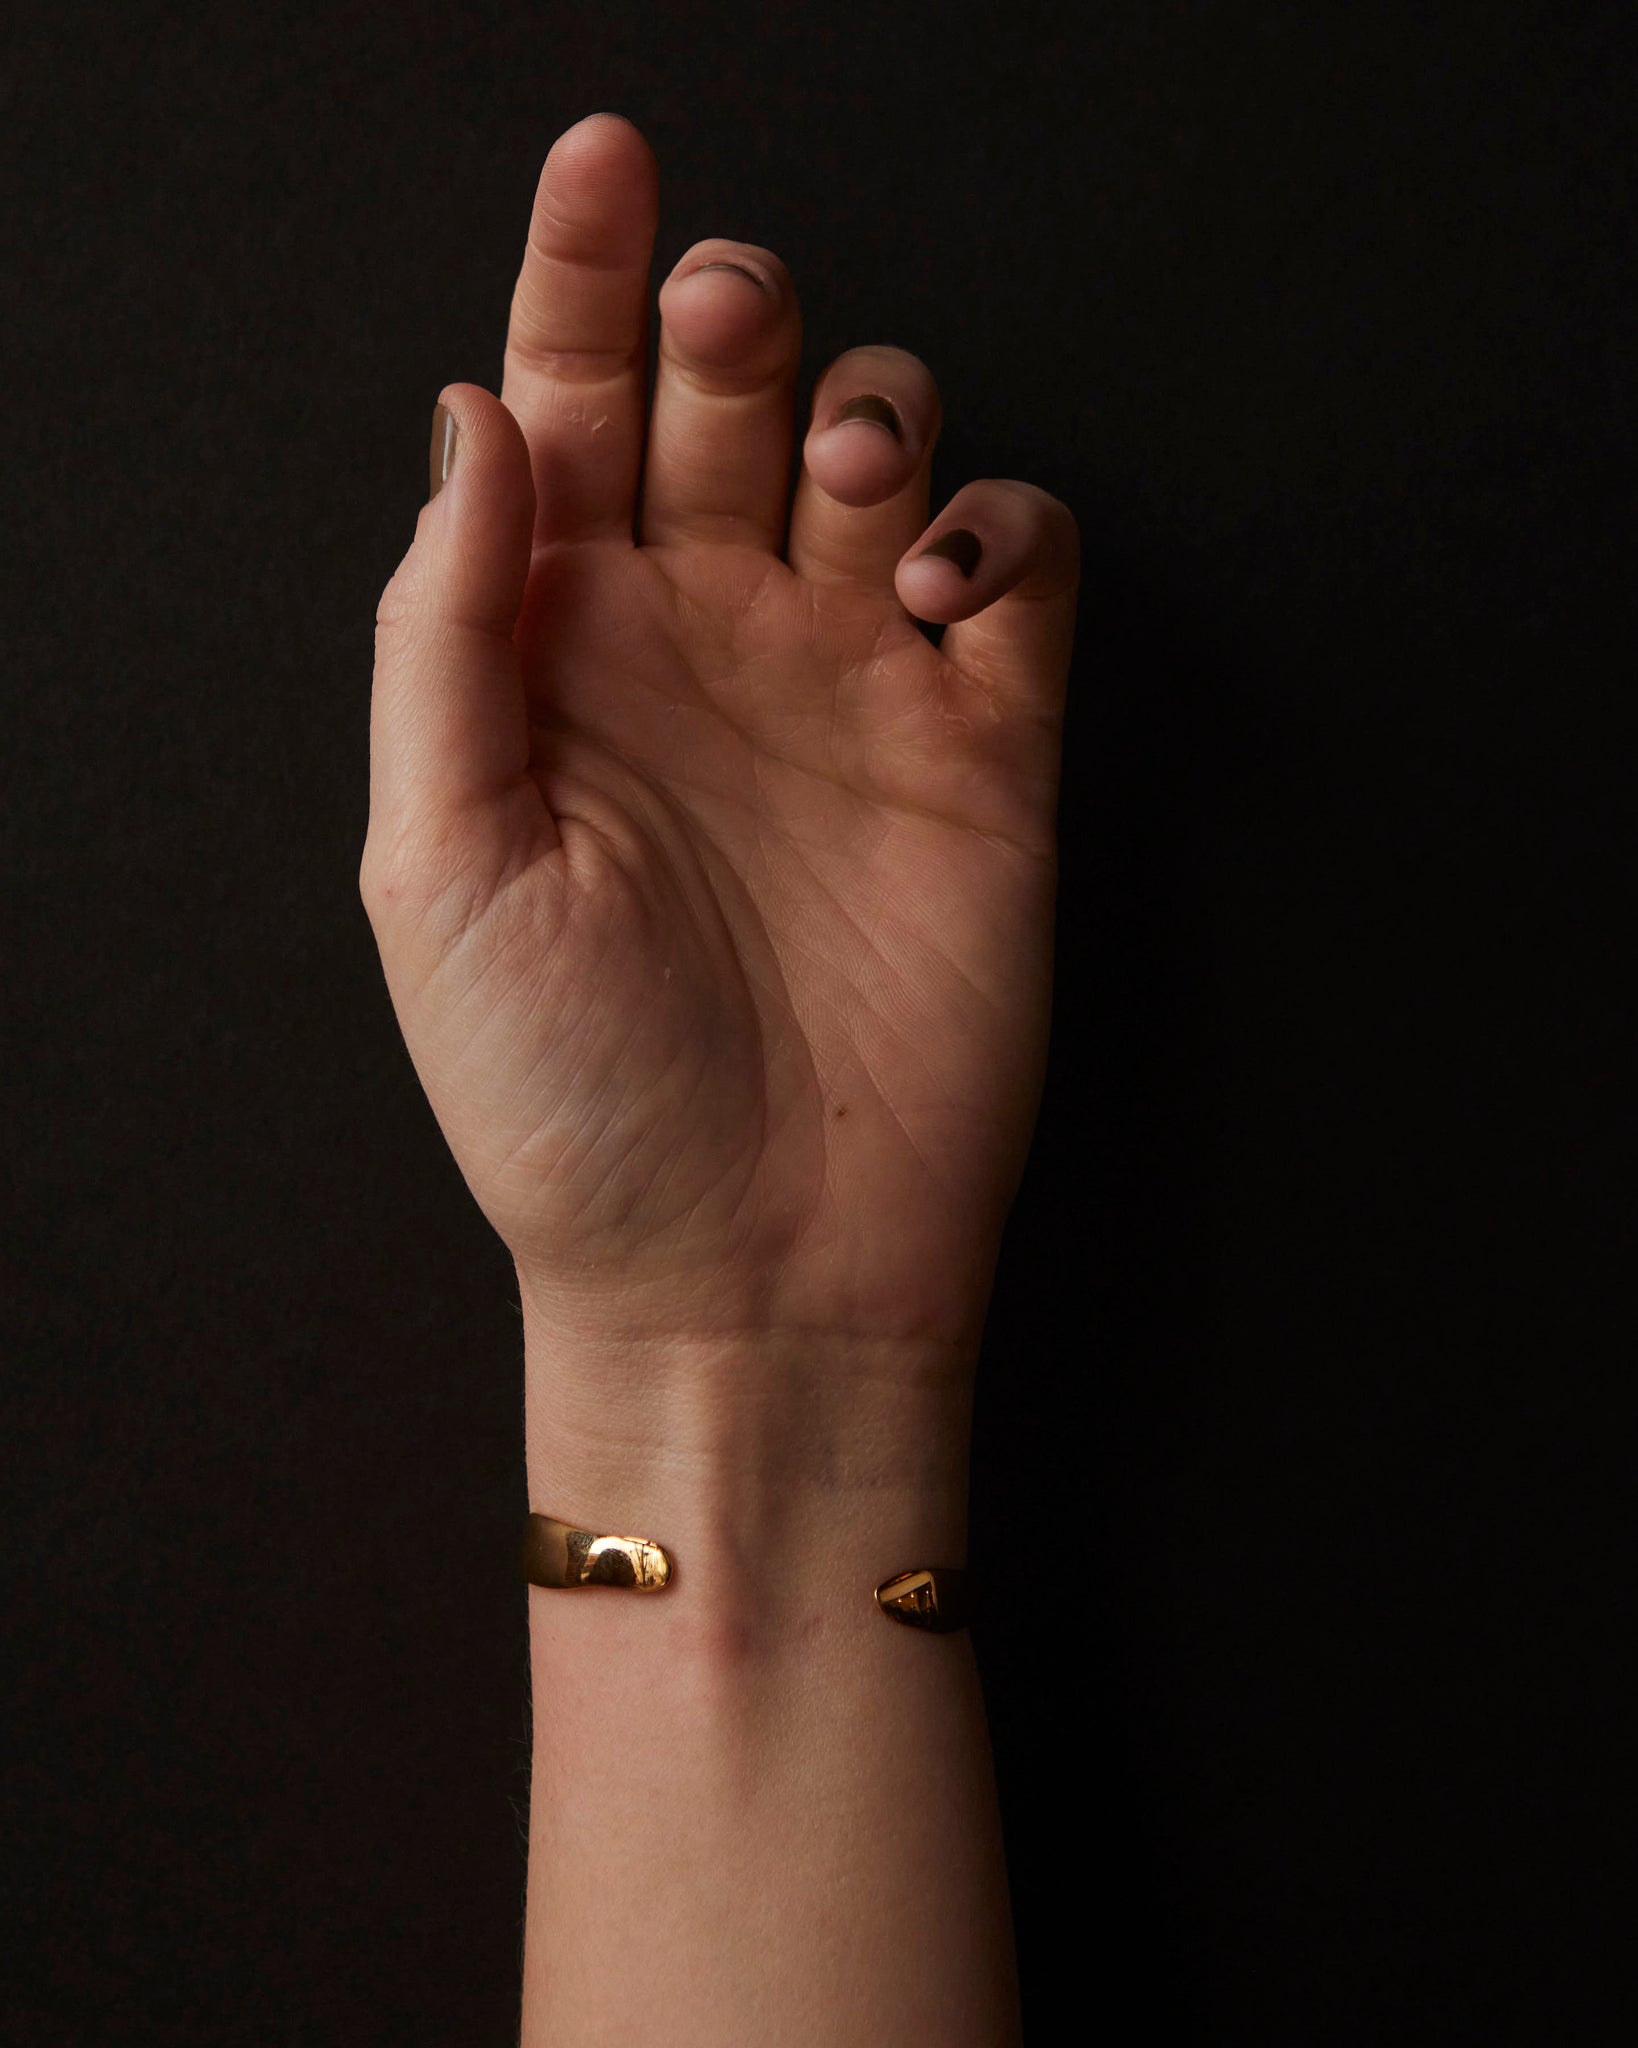 melted cuff bracelet – Hernan Herdez